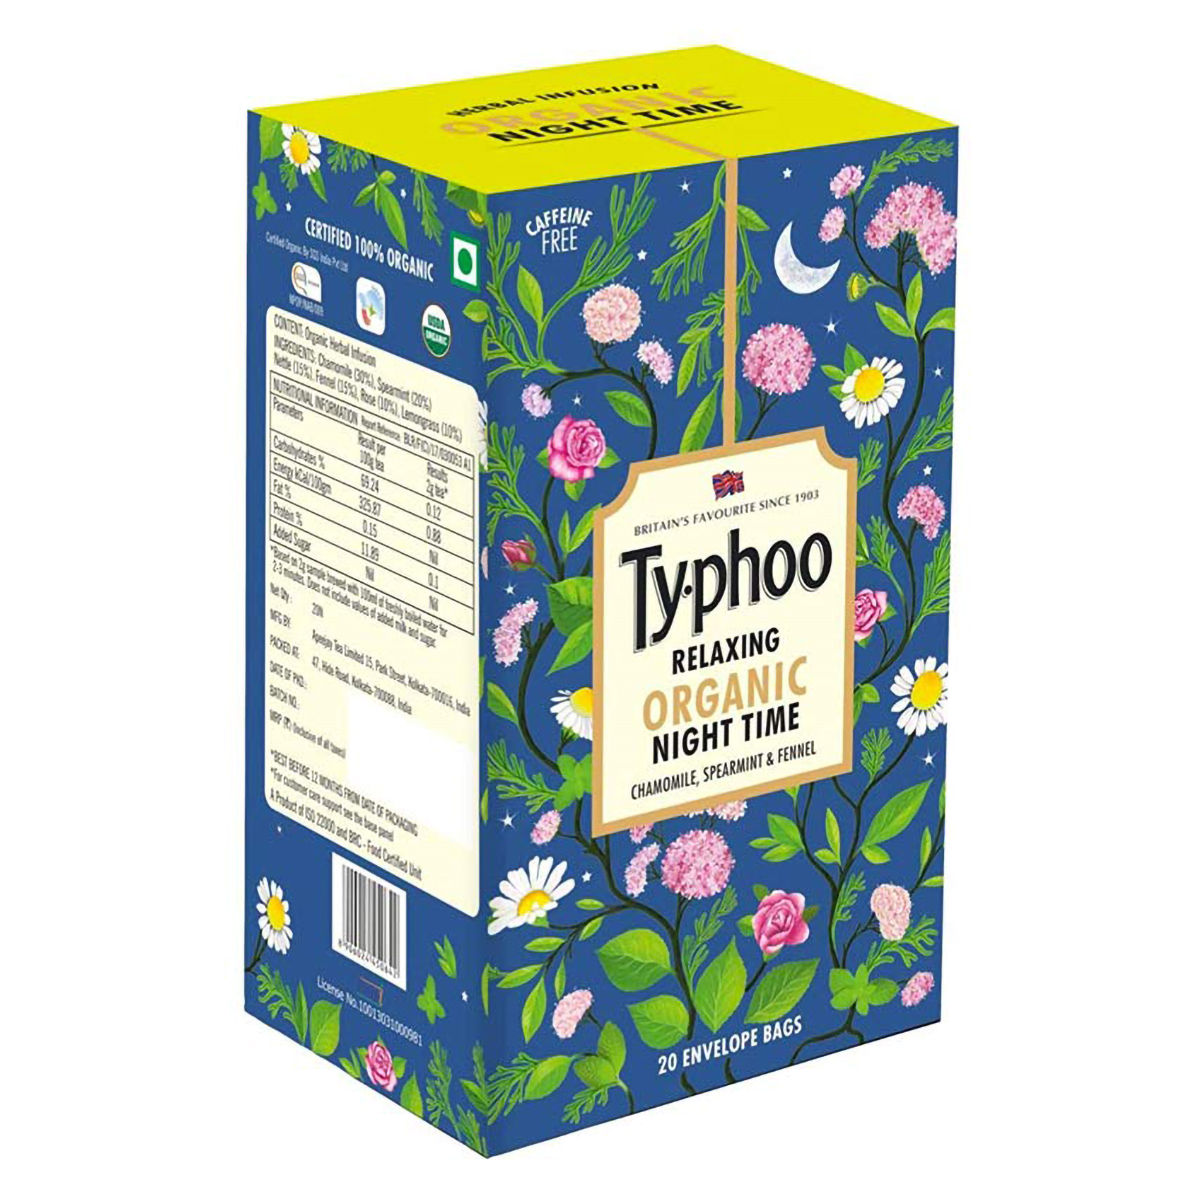 Buy Ty.phoo Relaxing Organic Night Time Tea Bags, 20 Count Online